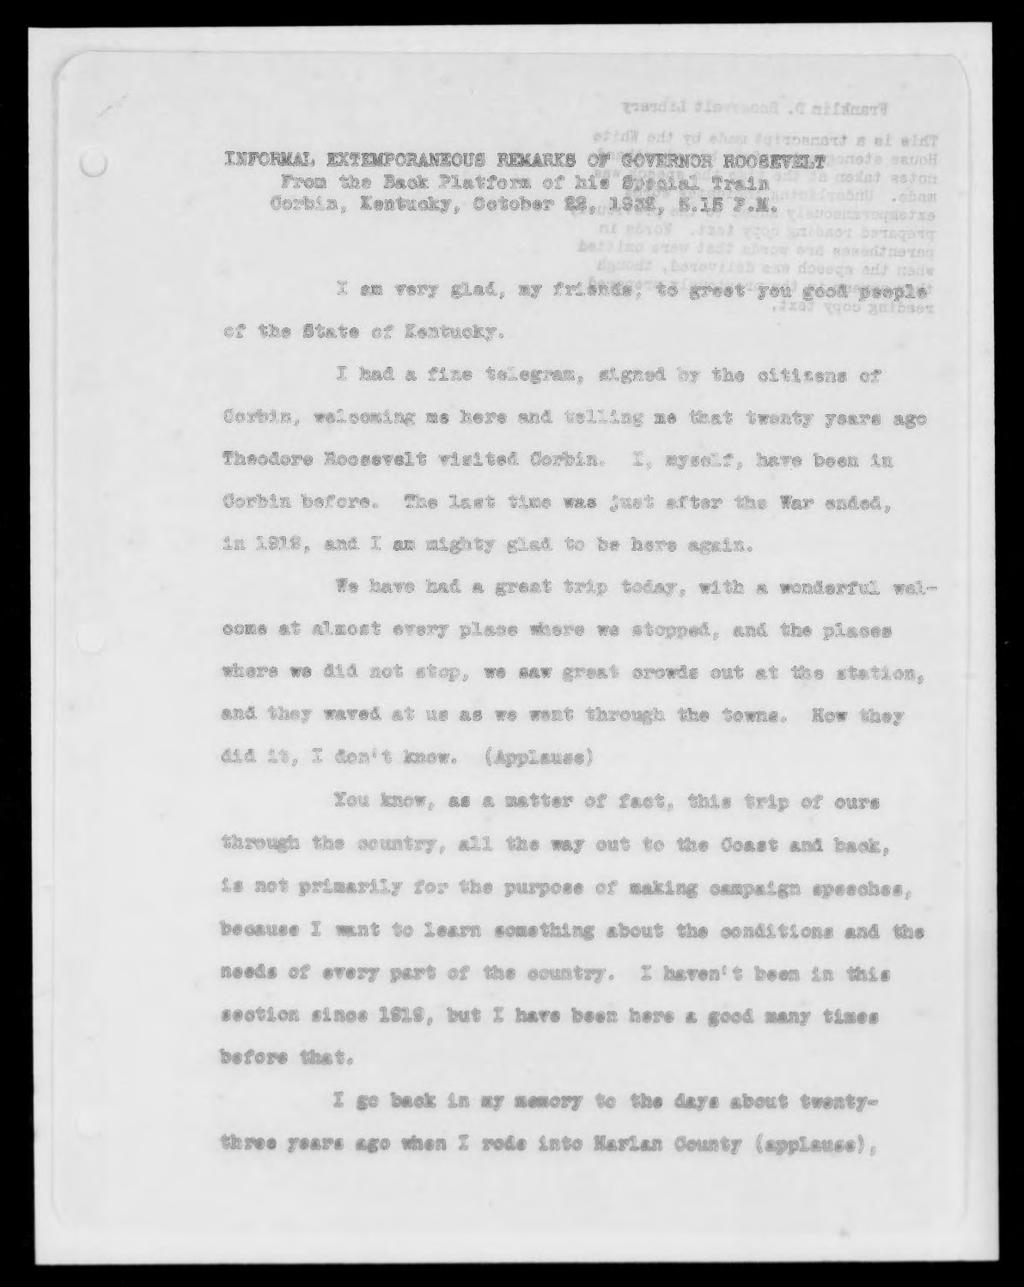 INFOJUIAL EXTEilPORANEOUS REilARKS OF GOVERNOR ROOSEVELT From the Back Platform of hie Speoial Train Corbin, Kentucky, October 22, 1932, 5.15 P.M.